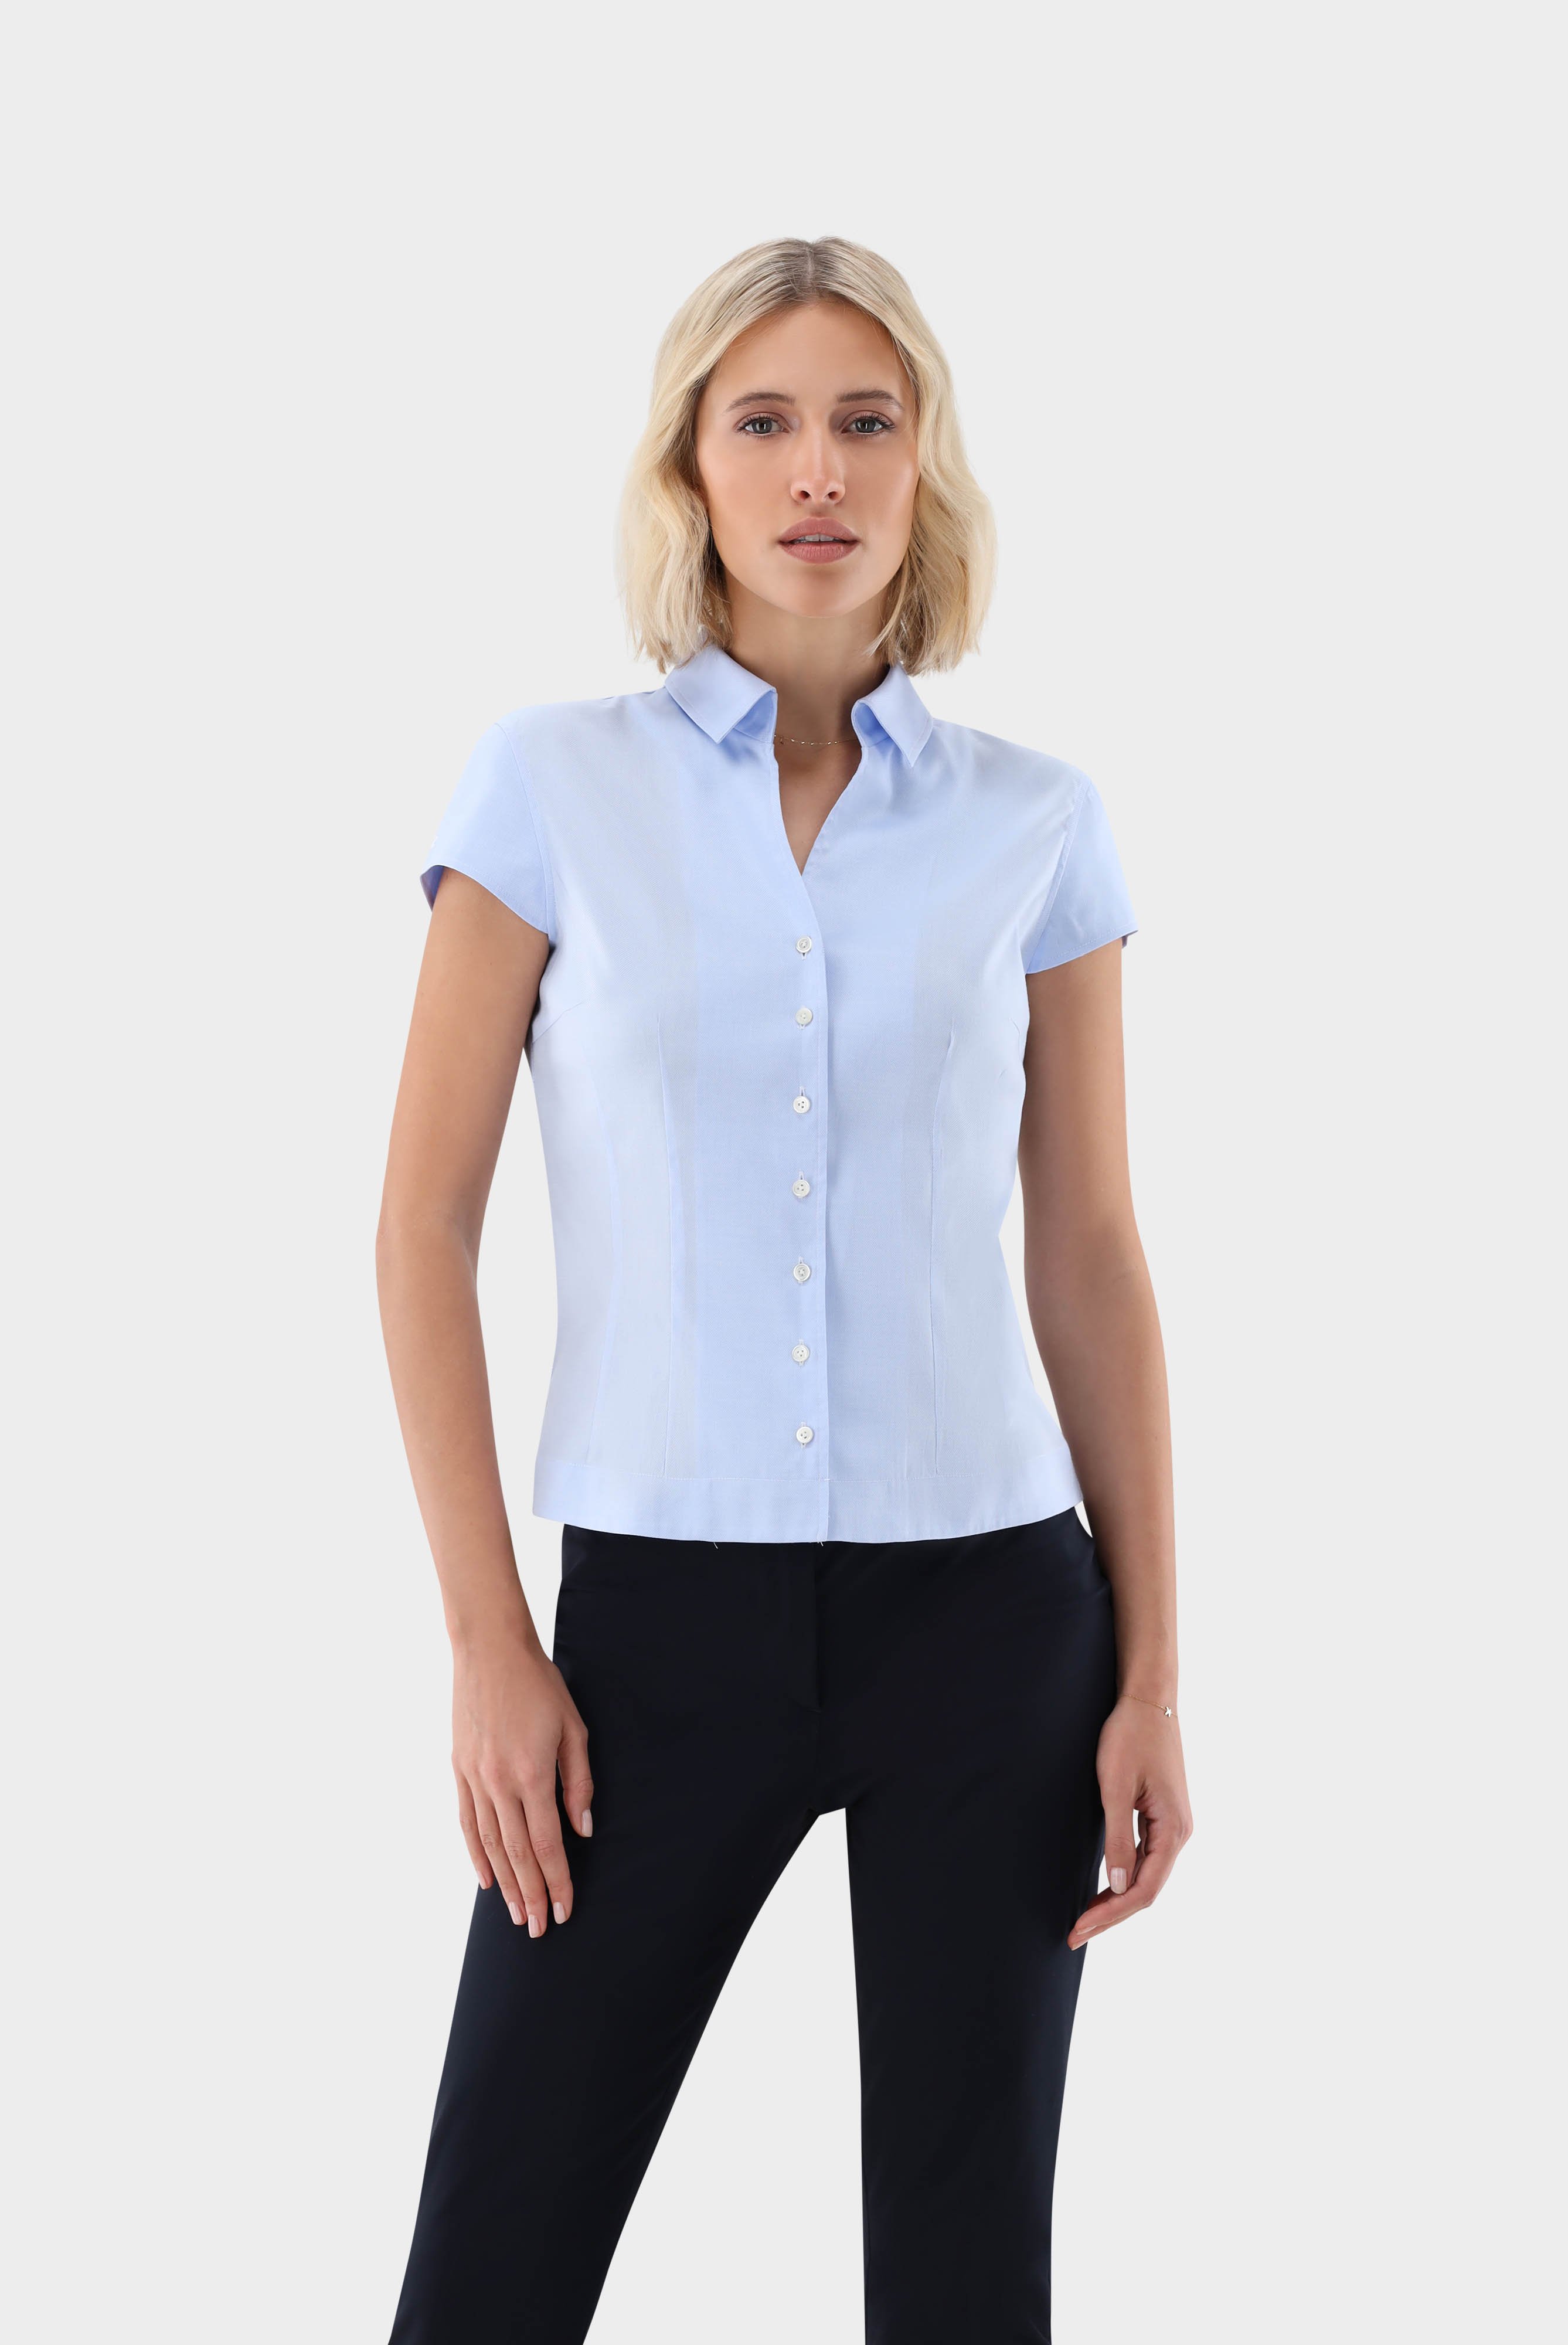 Business Blouses+Natté Short Sleeve Shirt Blouse+05.5029.73.130532.720.32